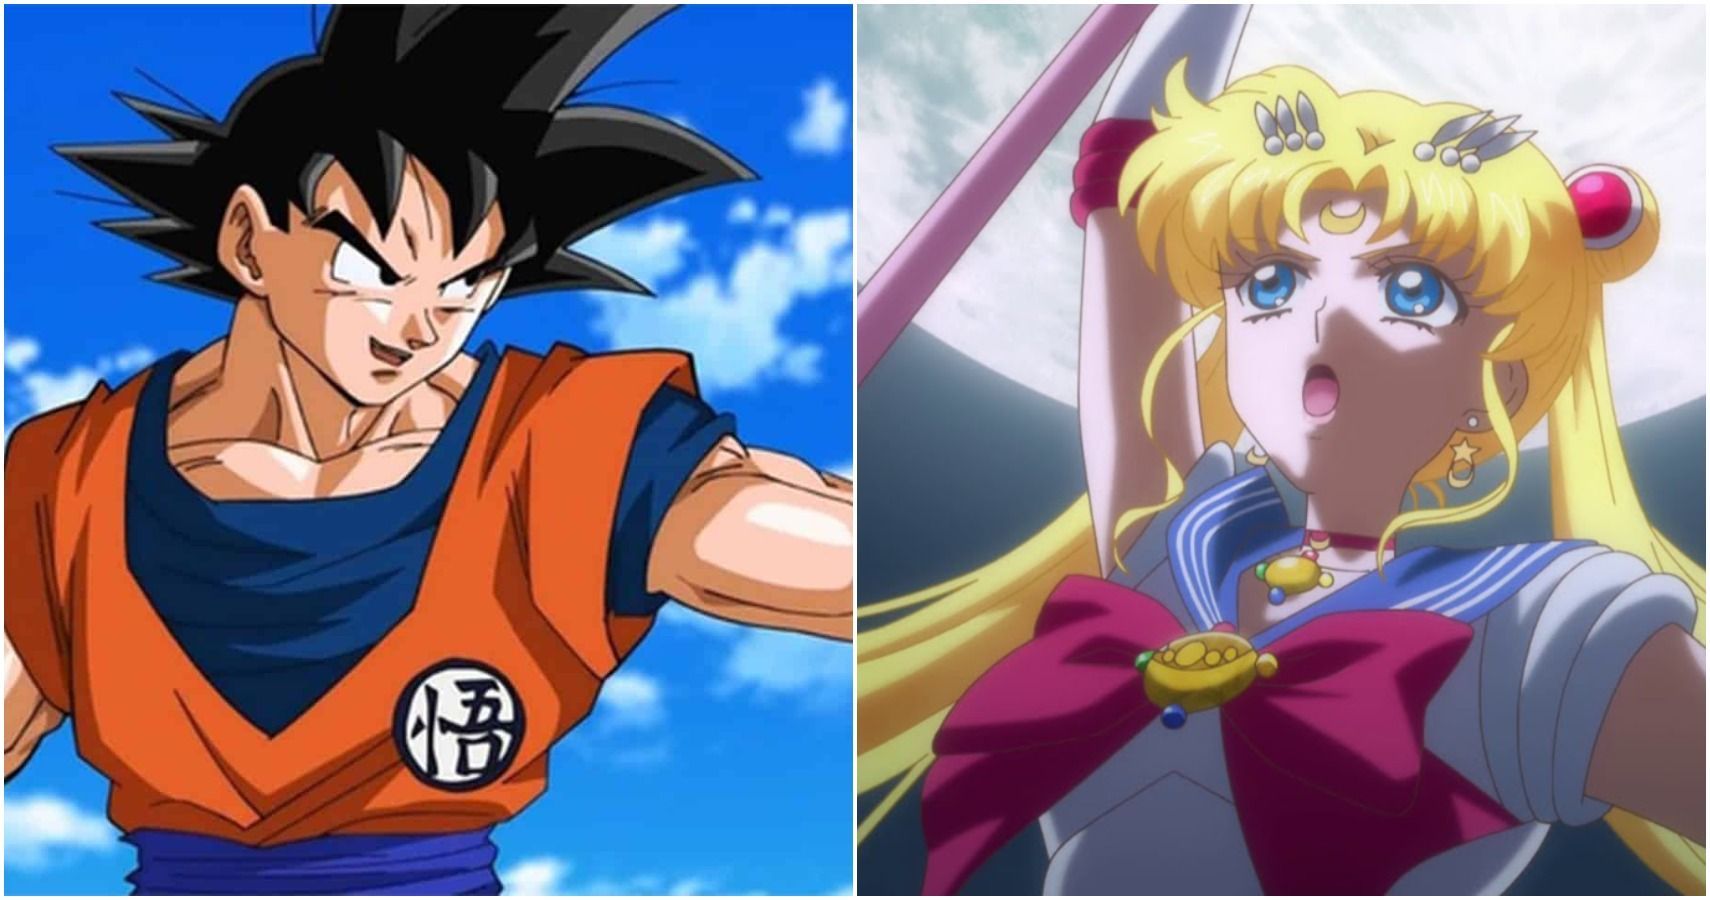 Sailor Moon VS Goku: Who Would Win?